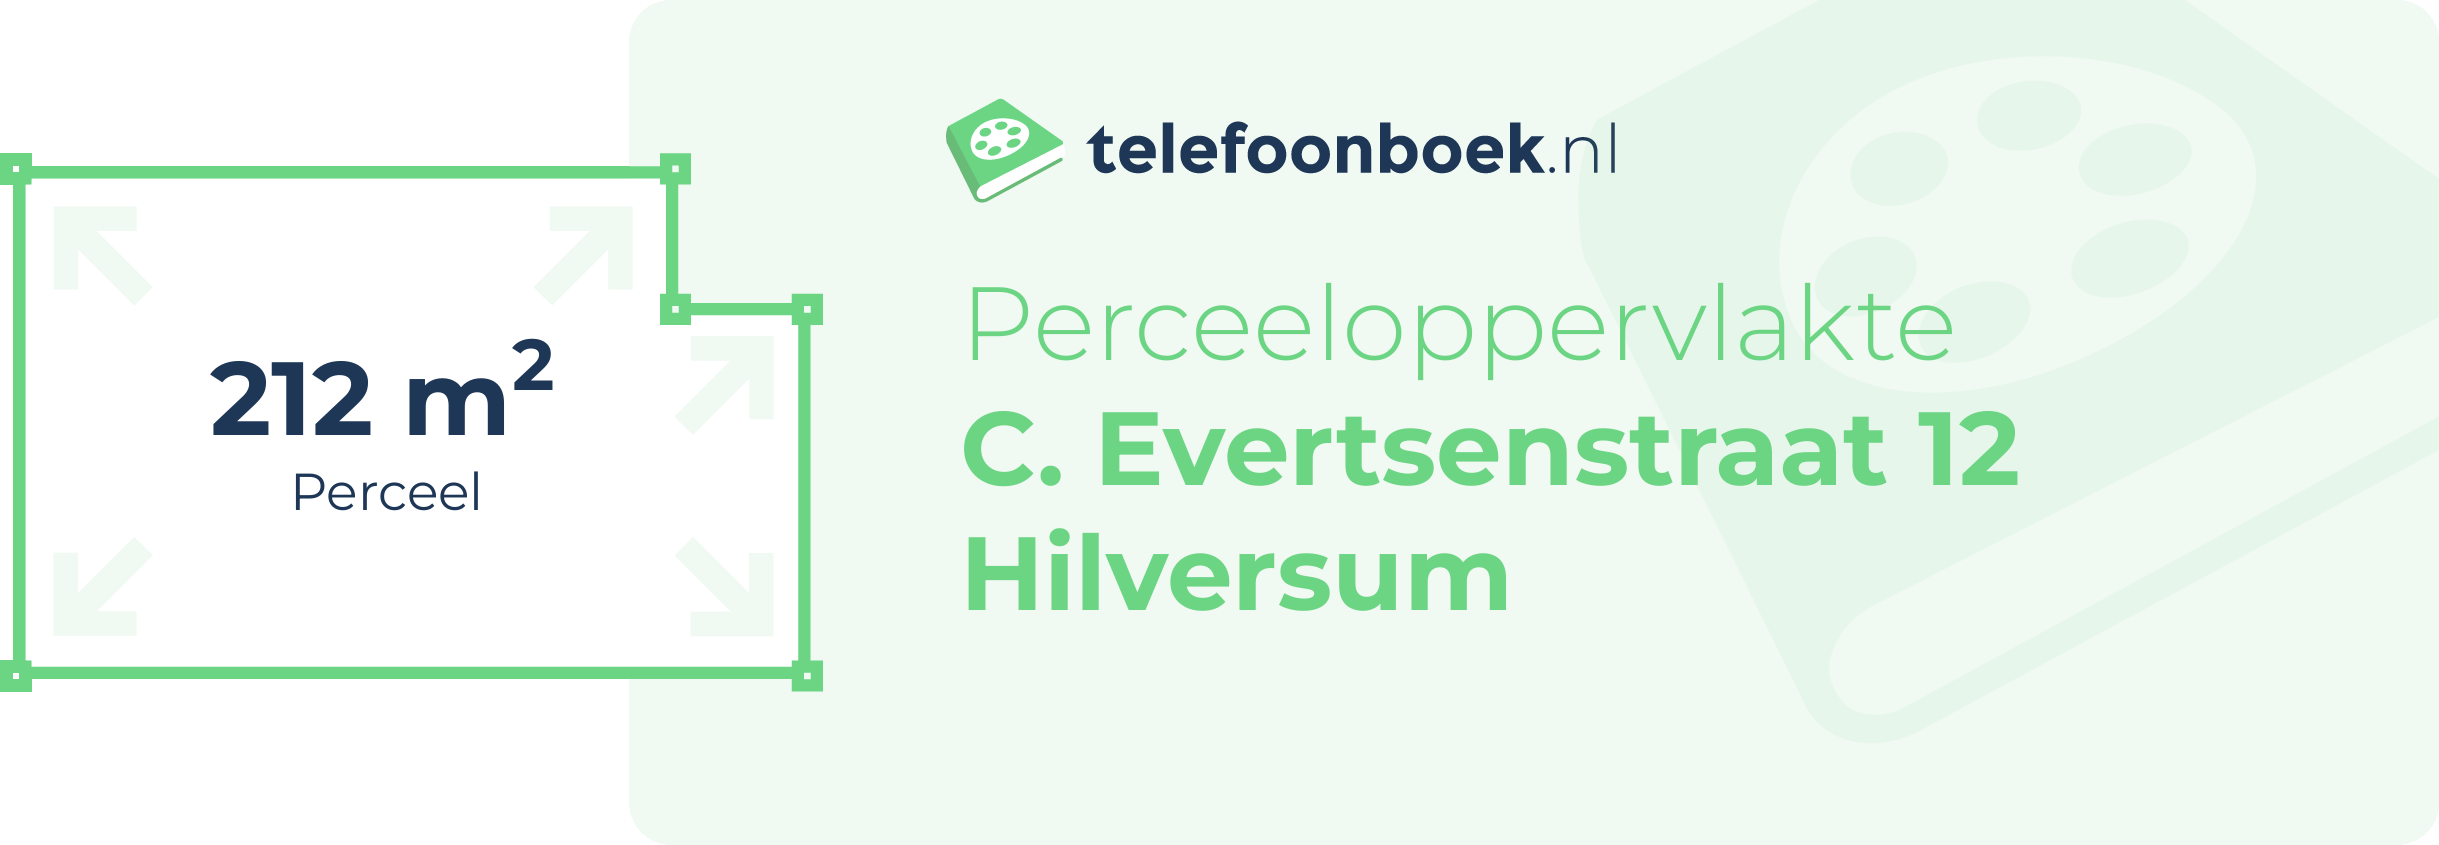 Perceeloppervlakte C. Evertsenstraat 12 Hilversum